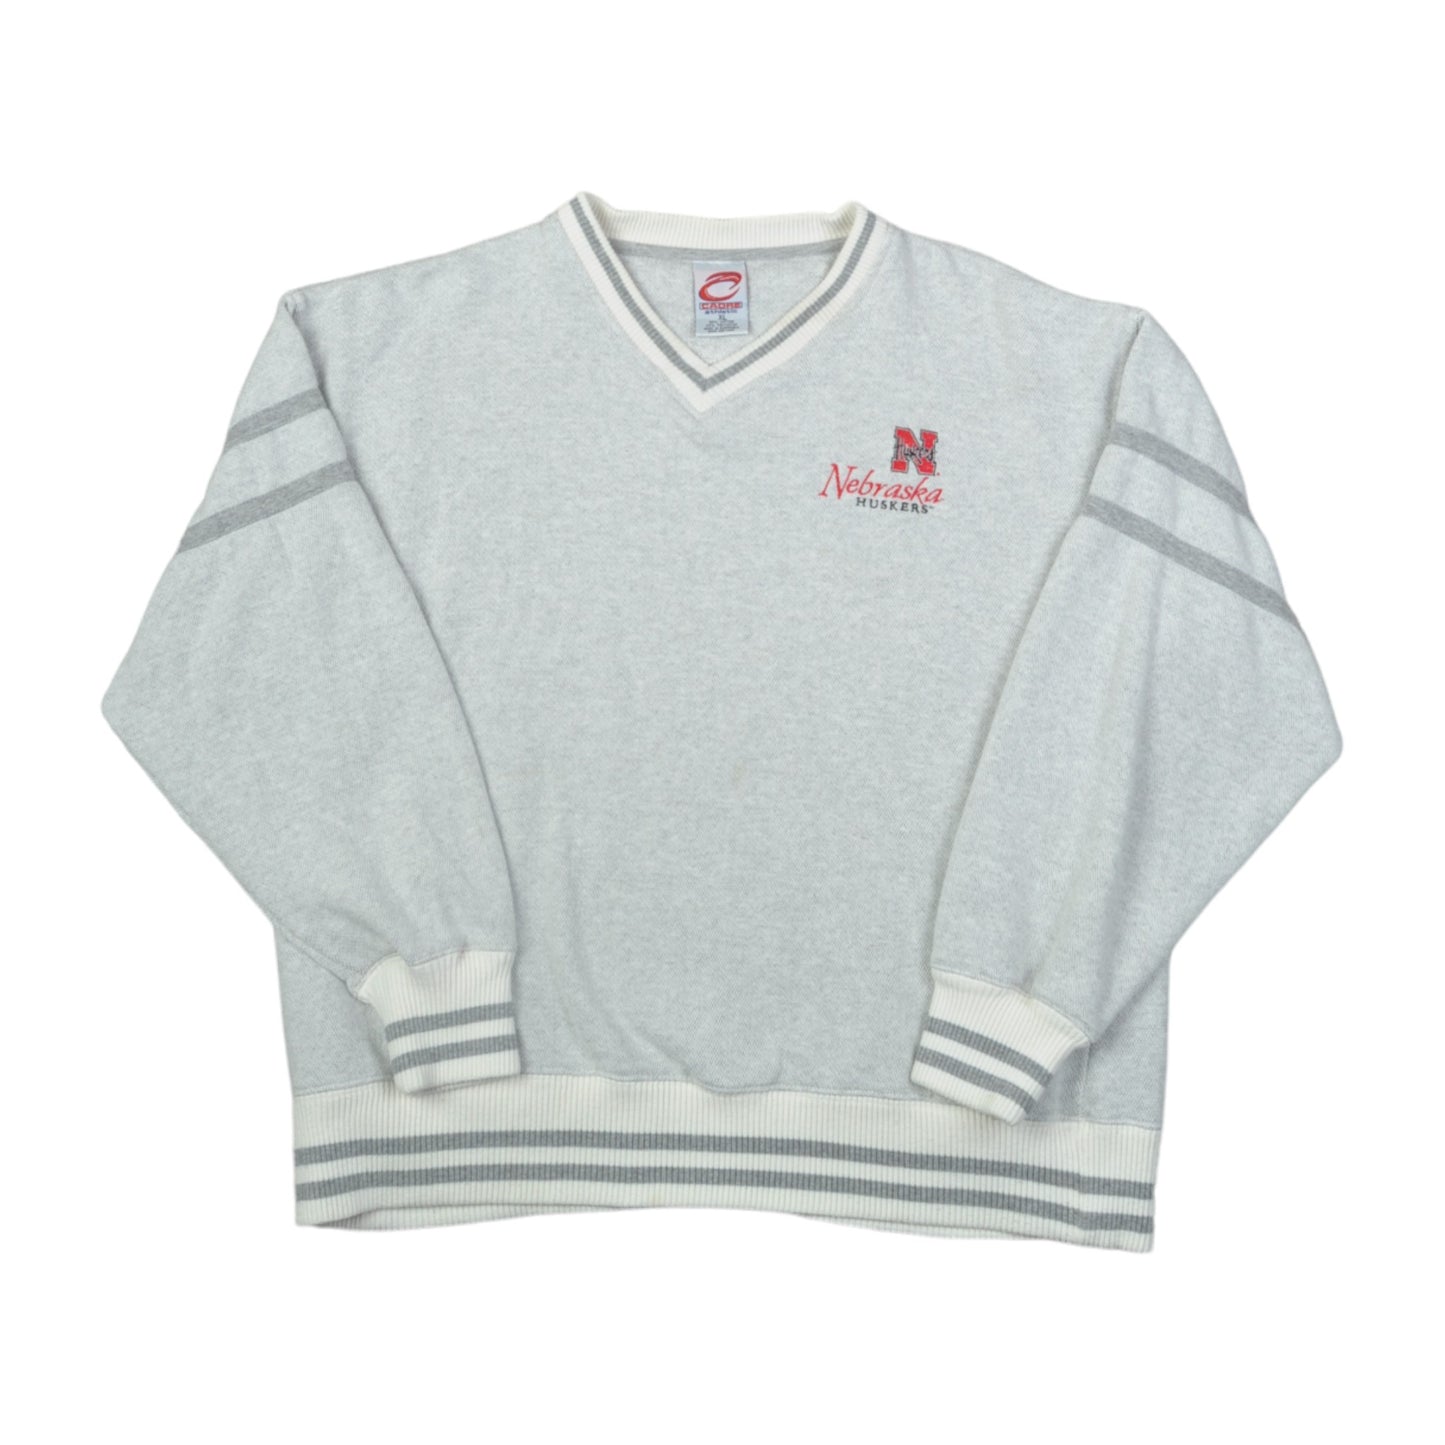 Vintage Nebraska Huskies Sweater Grey XL